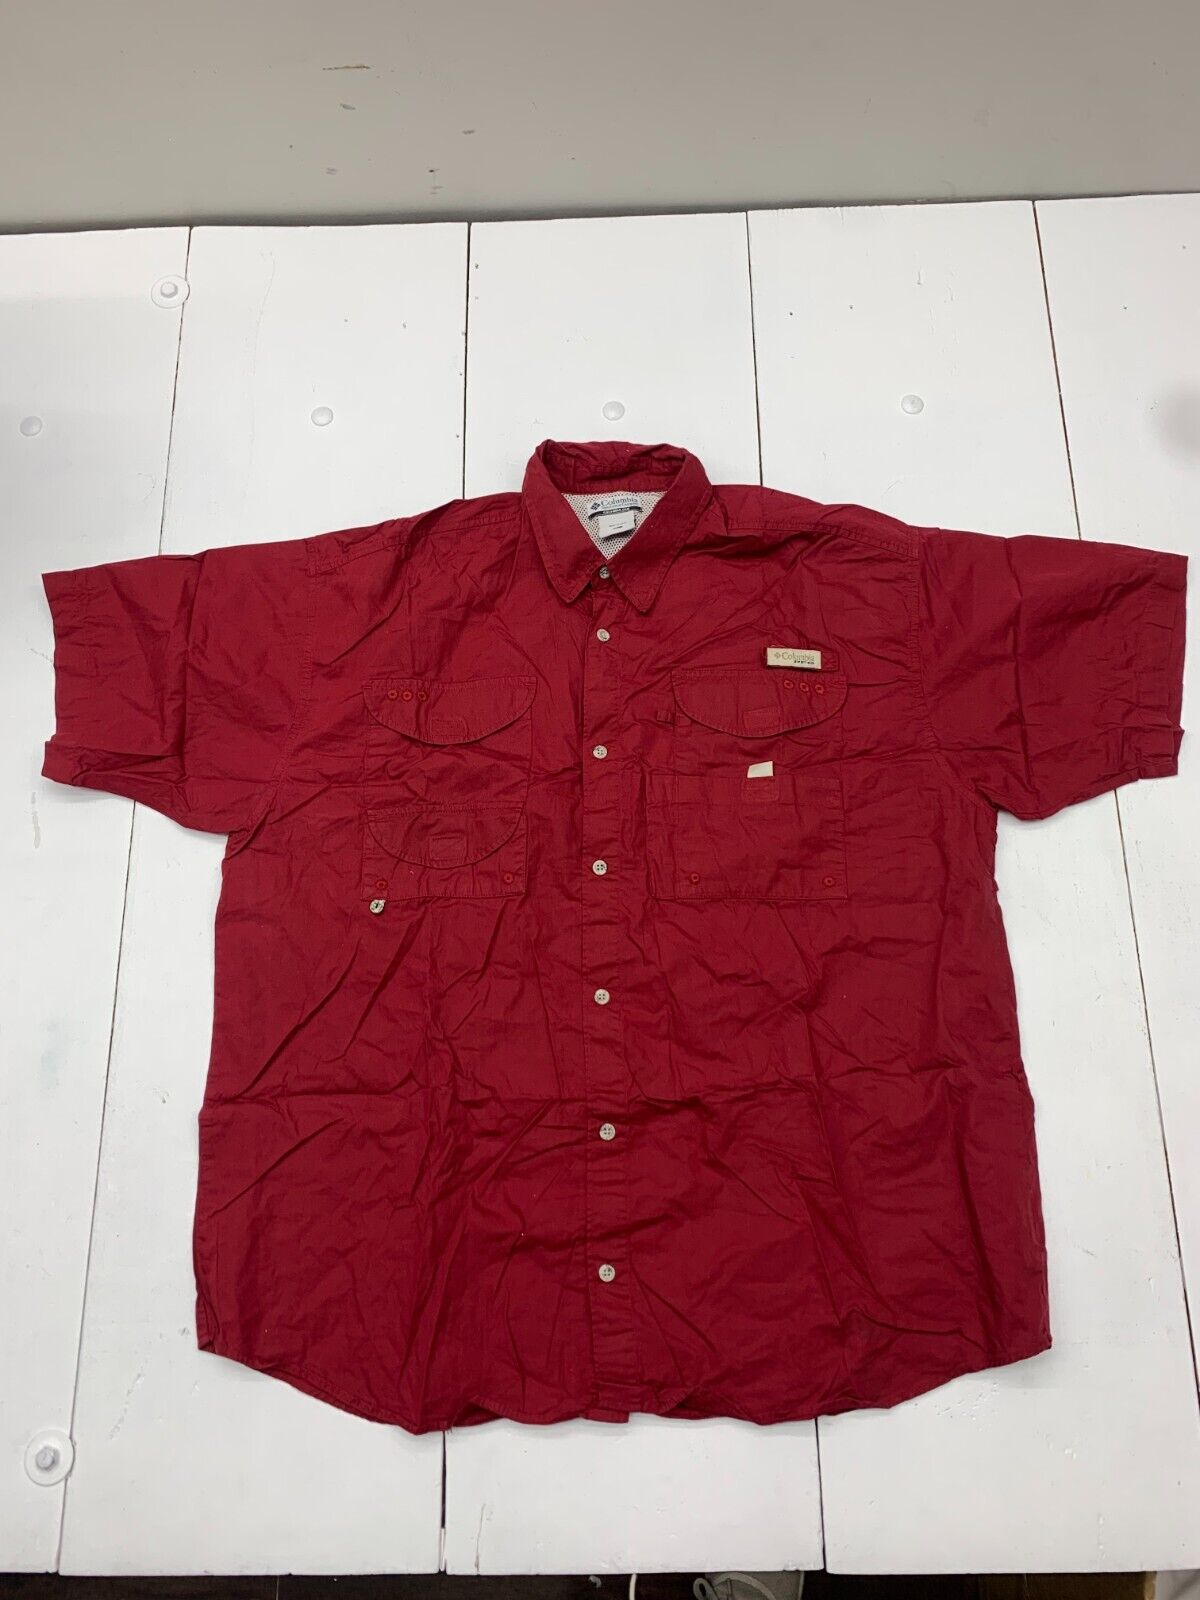 Columbia PFG Mens Red Short Sleeve Vented Fishing Shirt Size XL